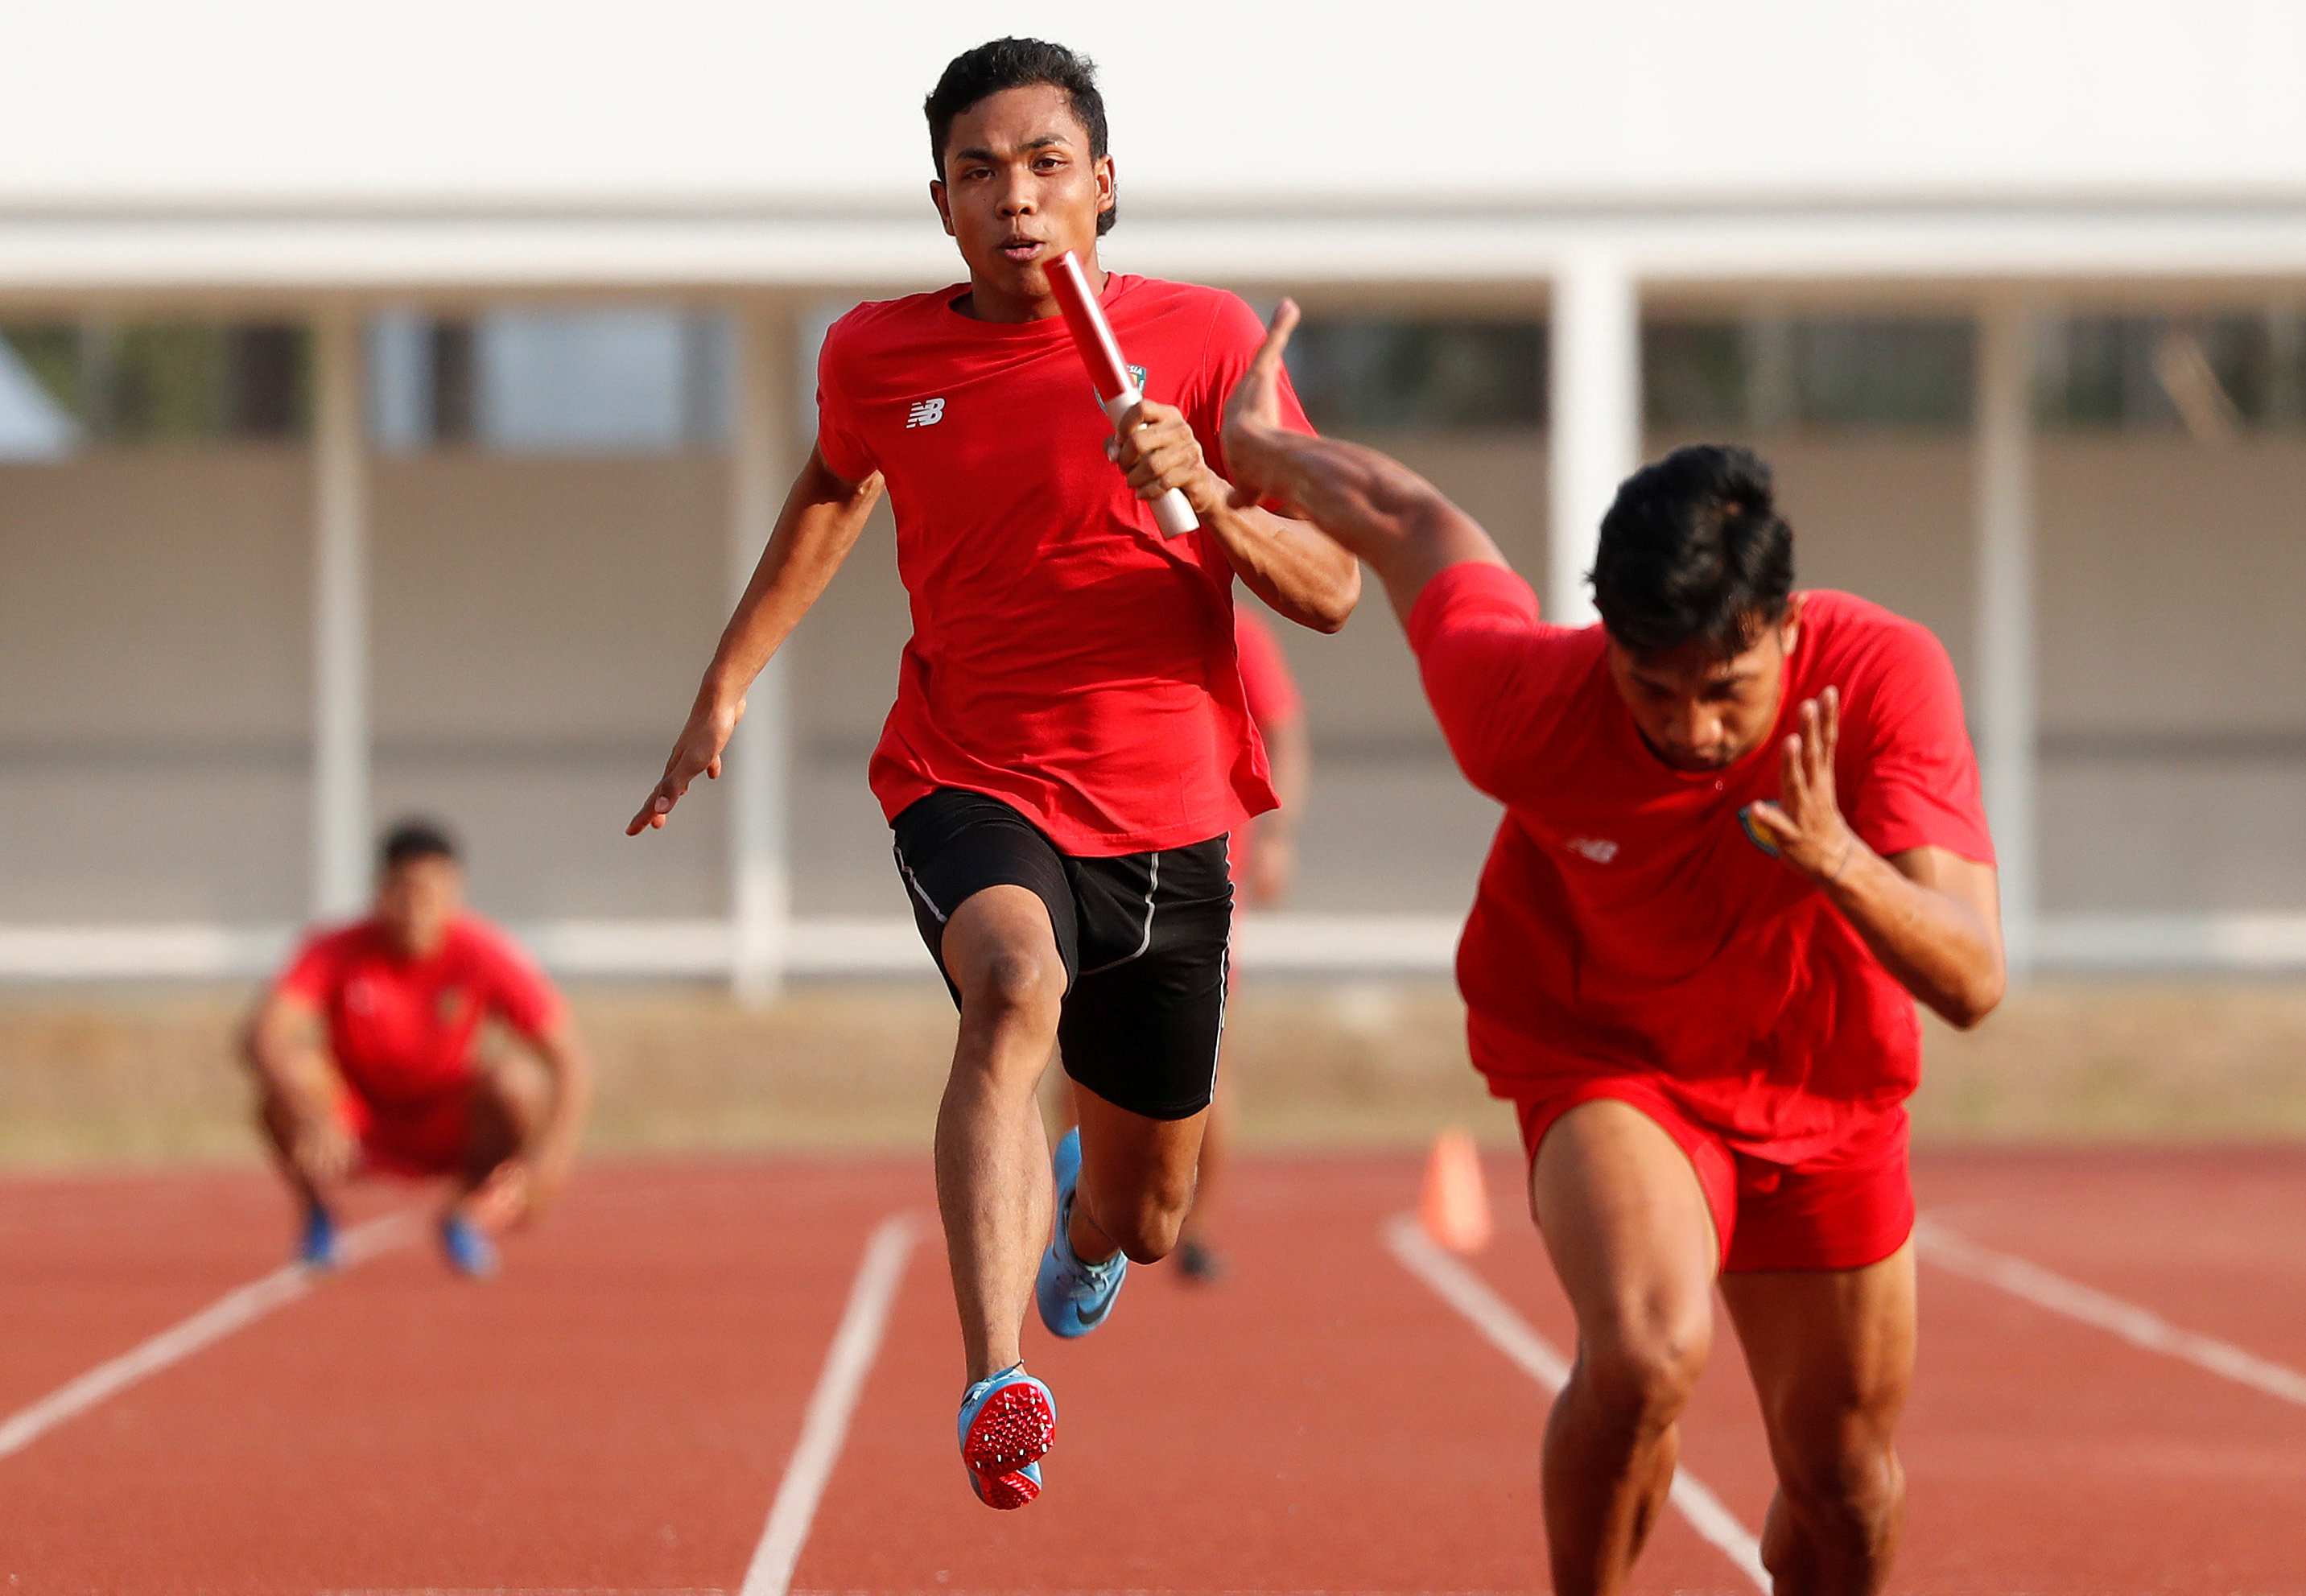 Athletics: World junior champion Zohri becomes face of Indonesia's Games